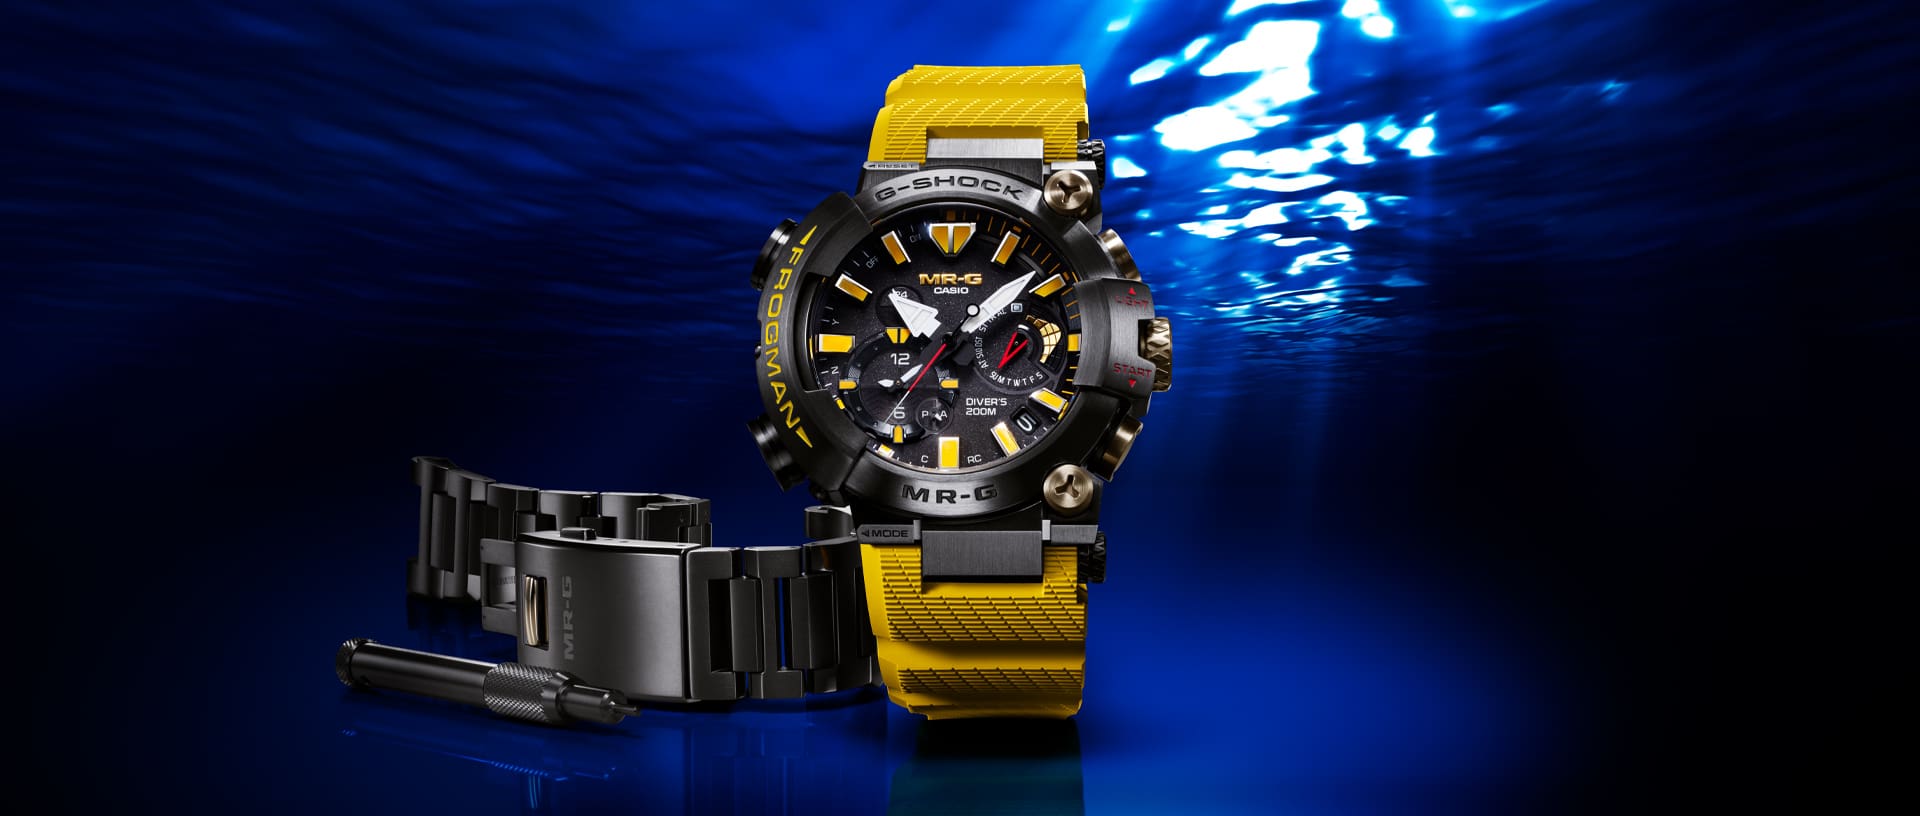 G-SHOCK MRGBF1000E-1A9 FROGMAN black analog watch with yellow band